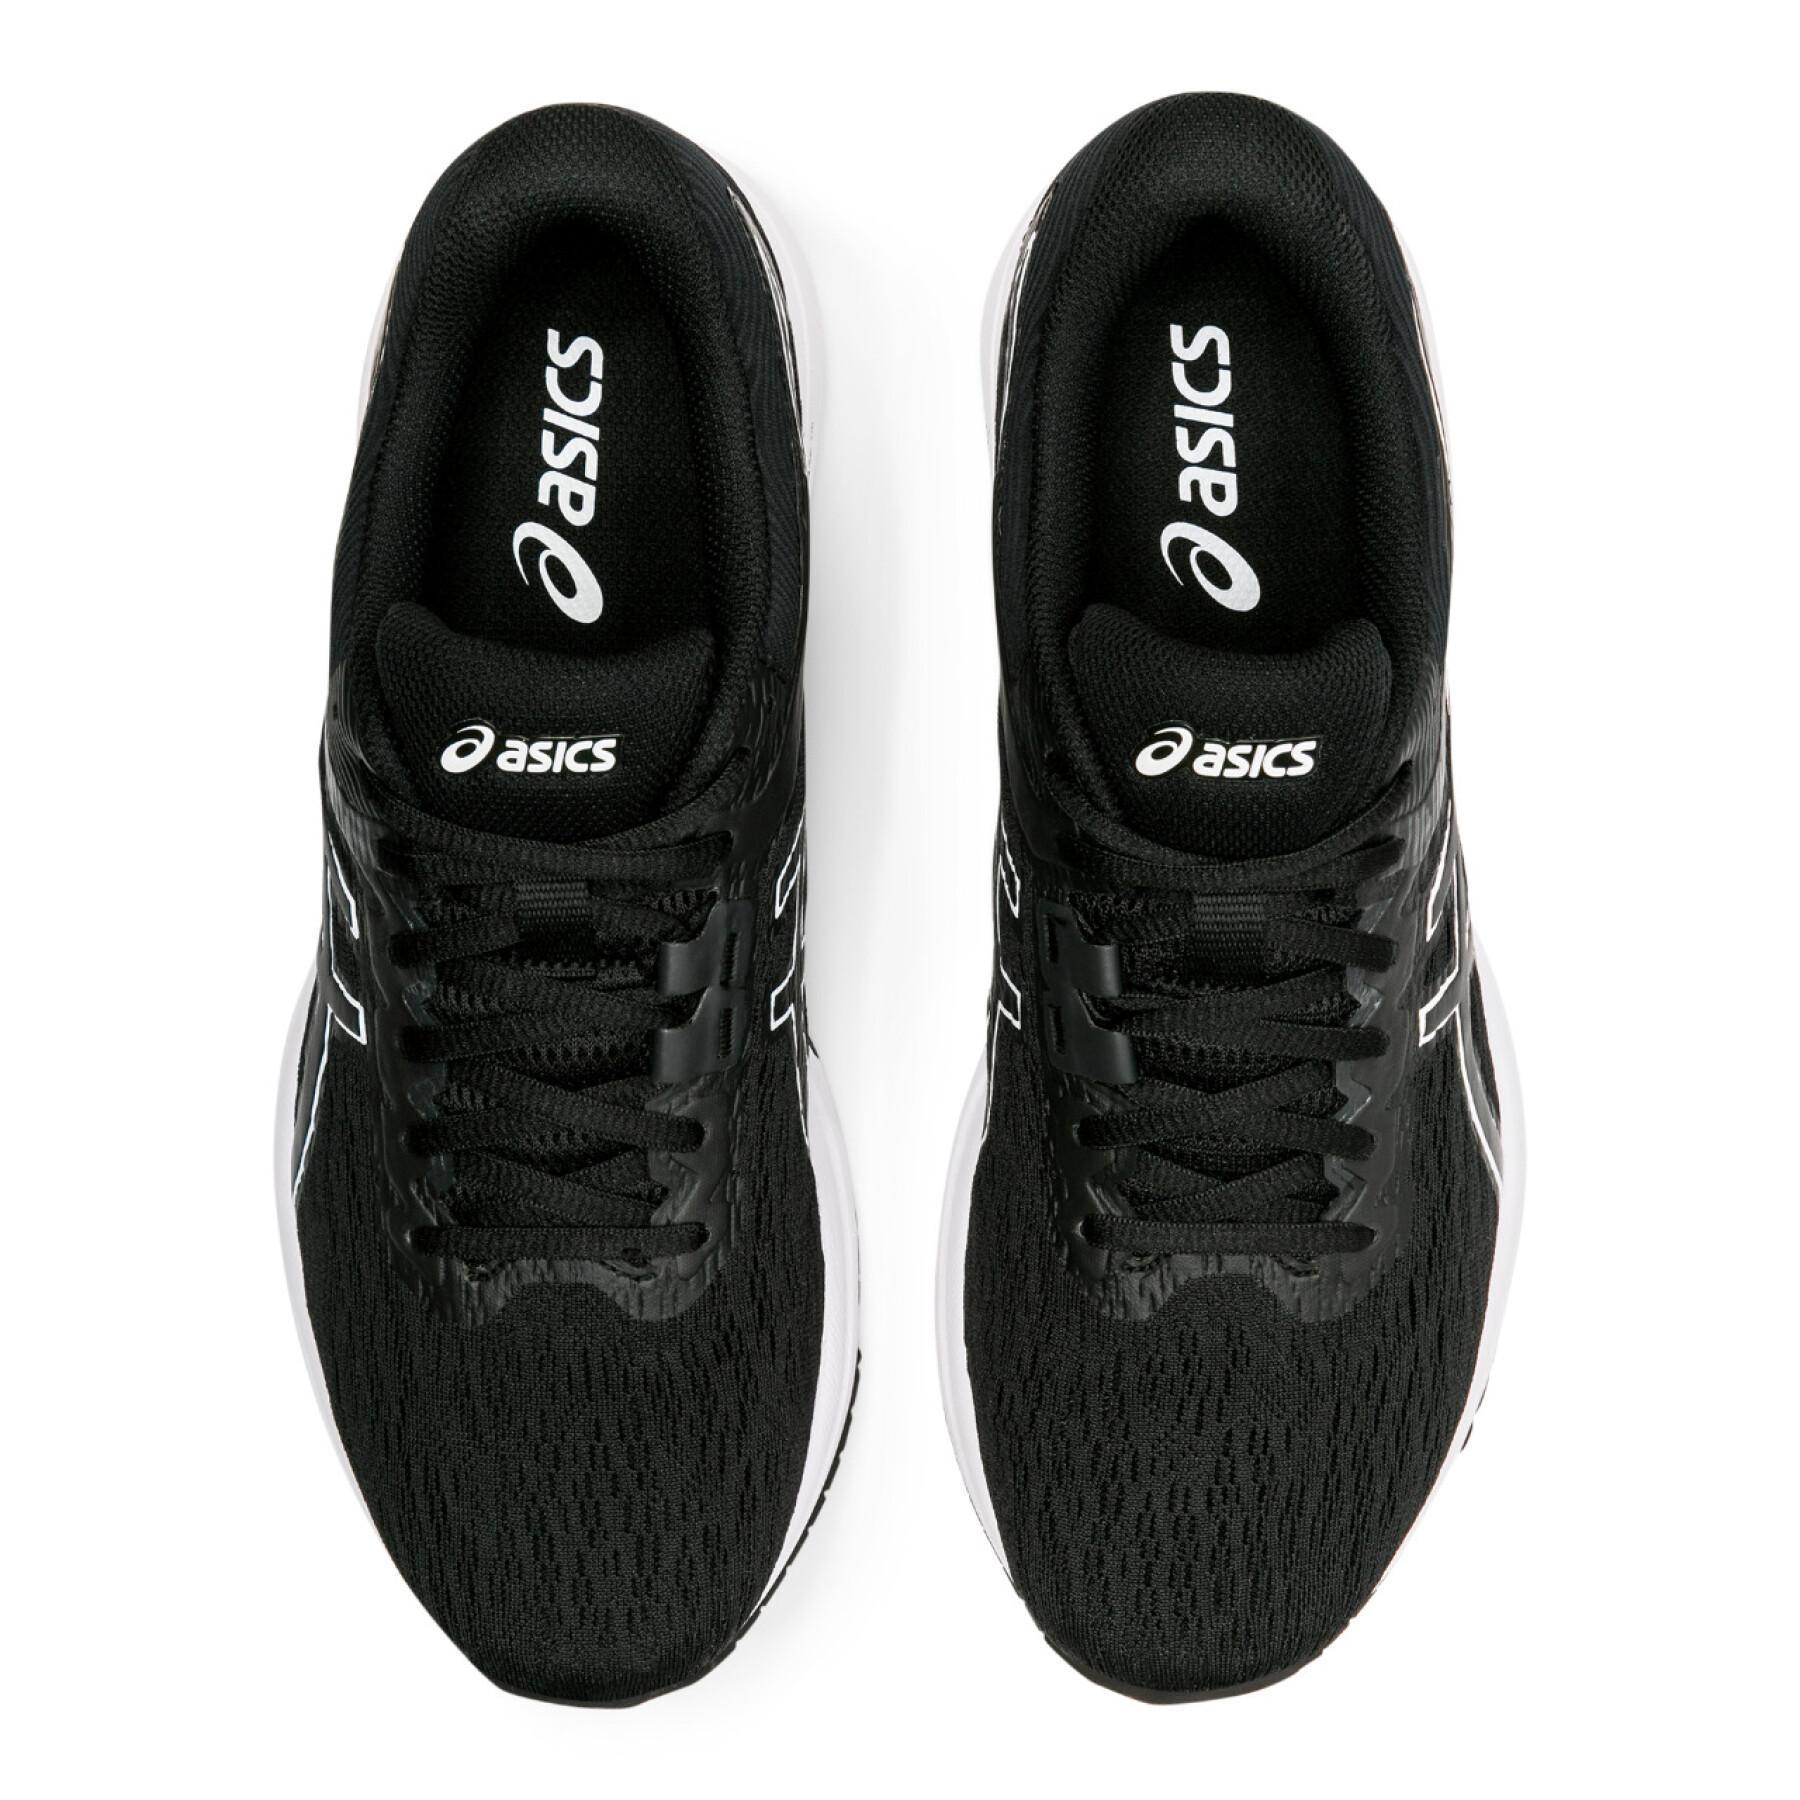 Zapatos Asics Gt-800